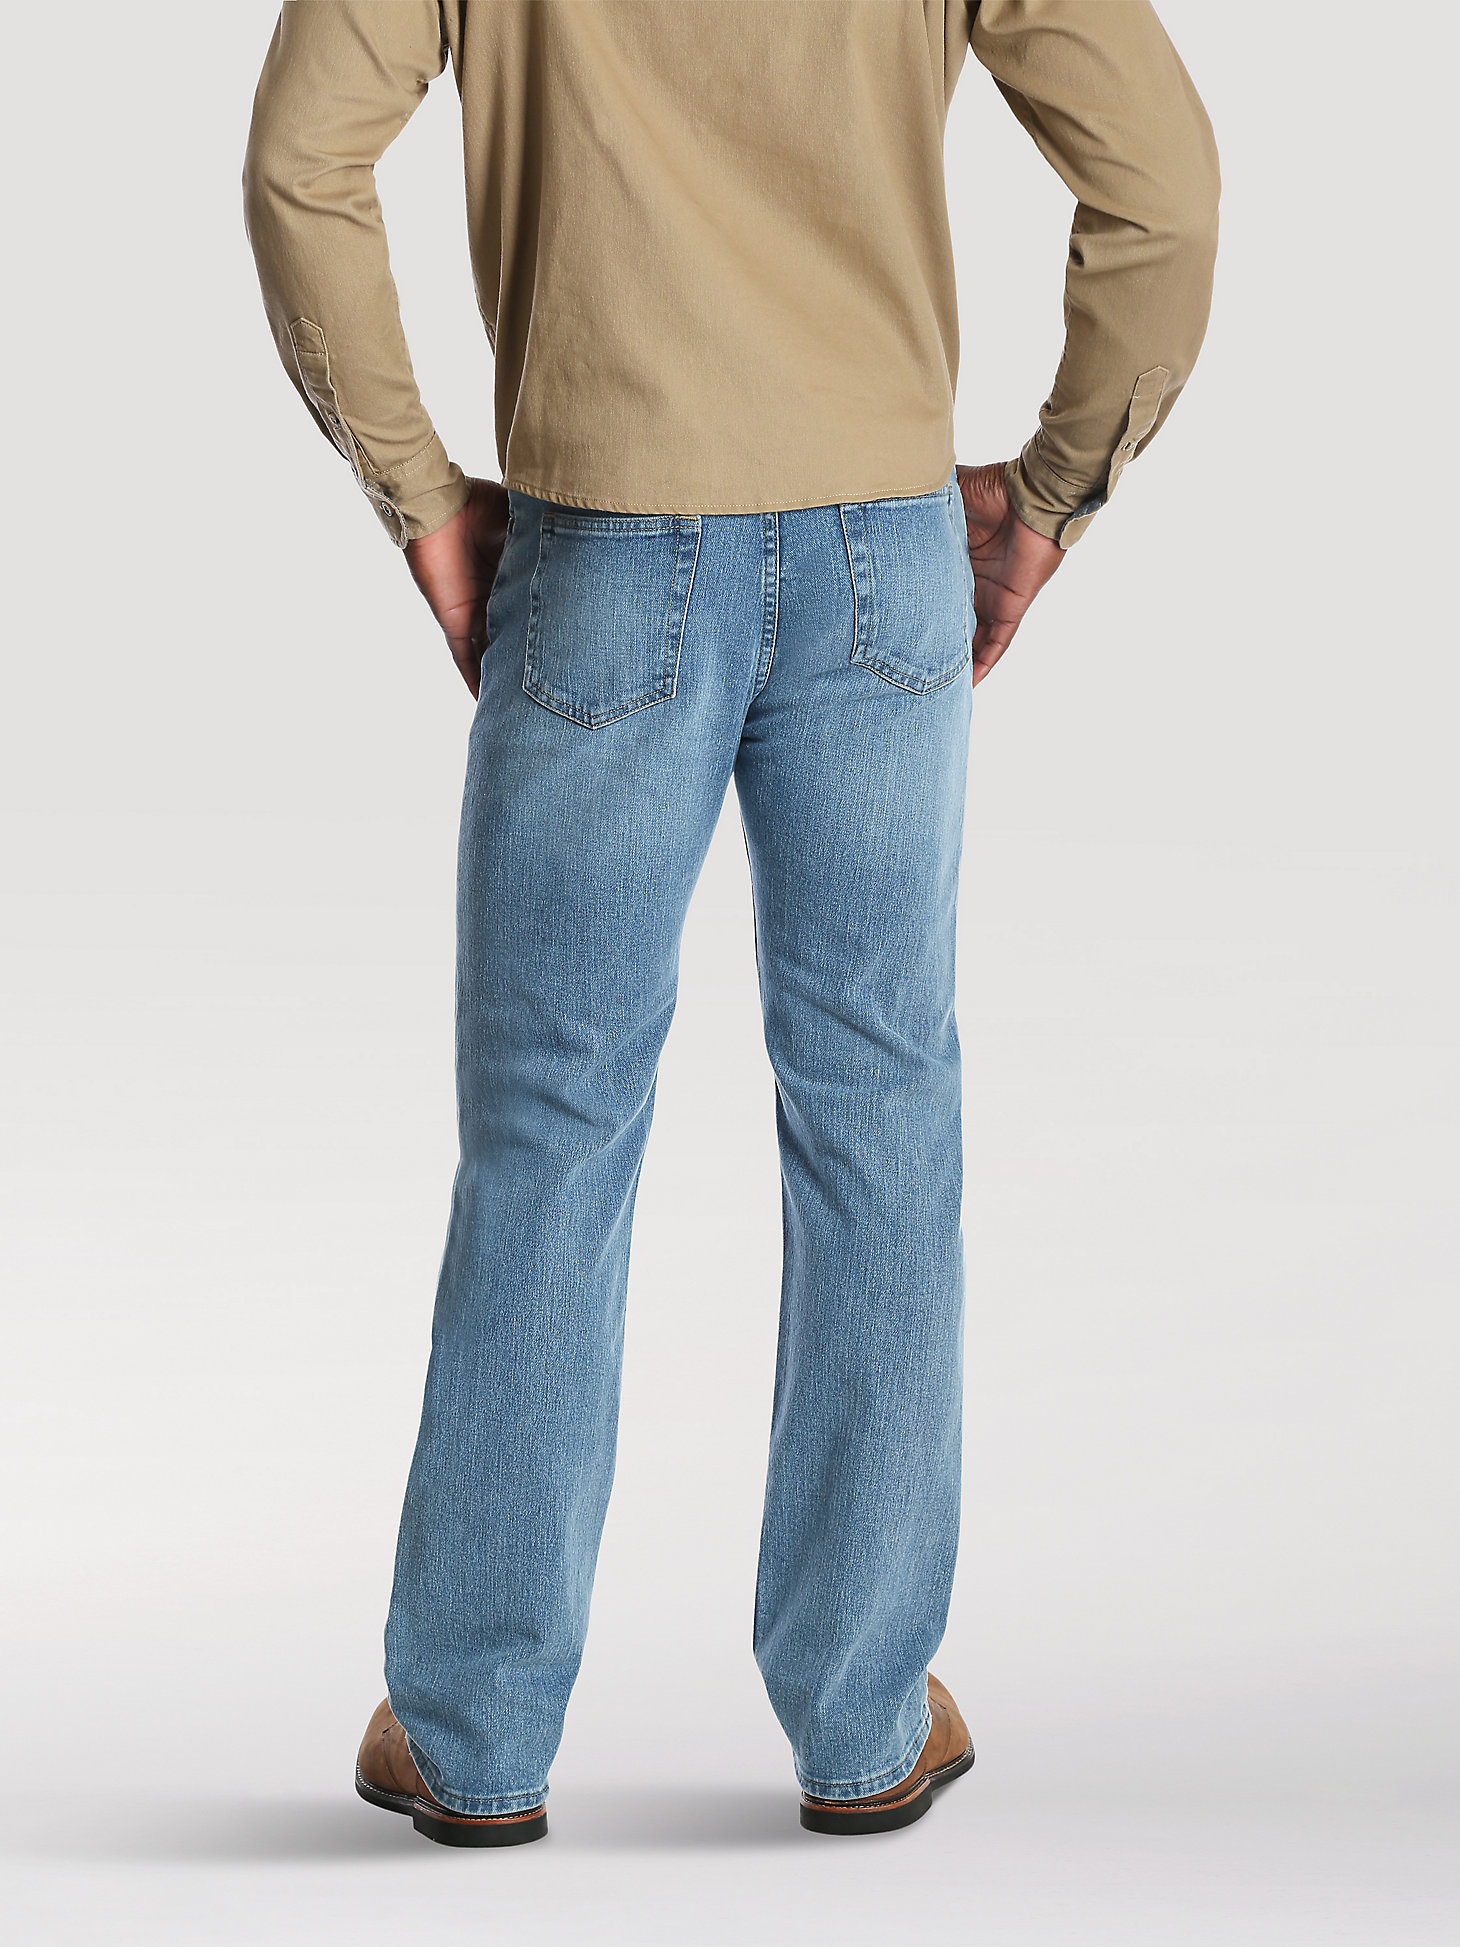 Wrangler® Five Star Premium Denim Flex For Comfort Regular Fit Jean in Stonewash Light alternative view 1